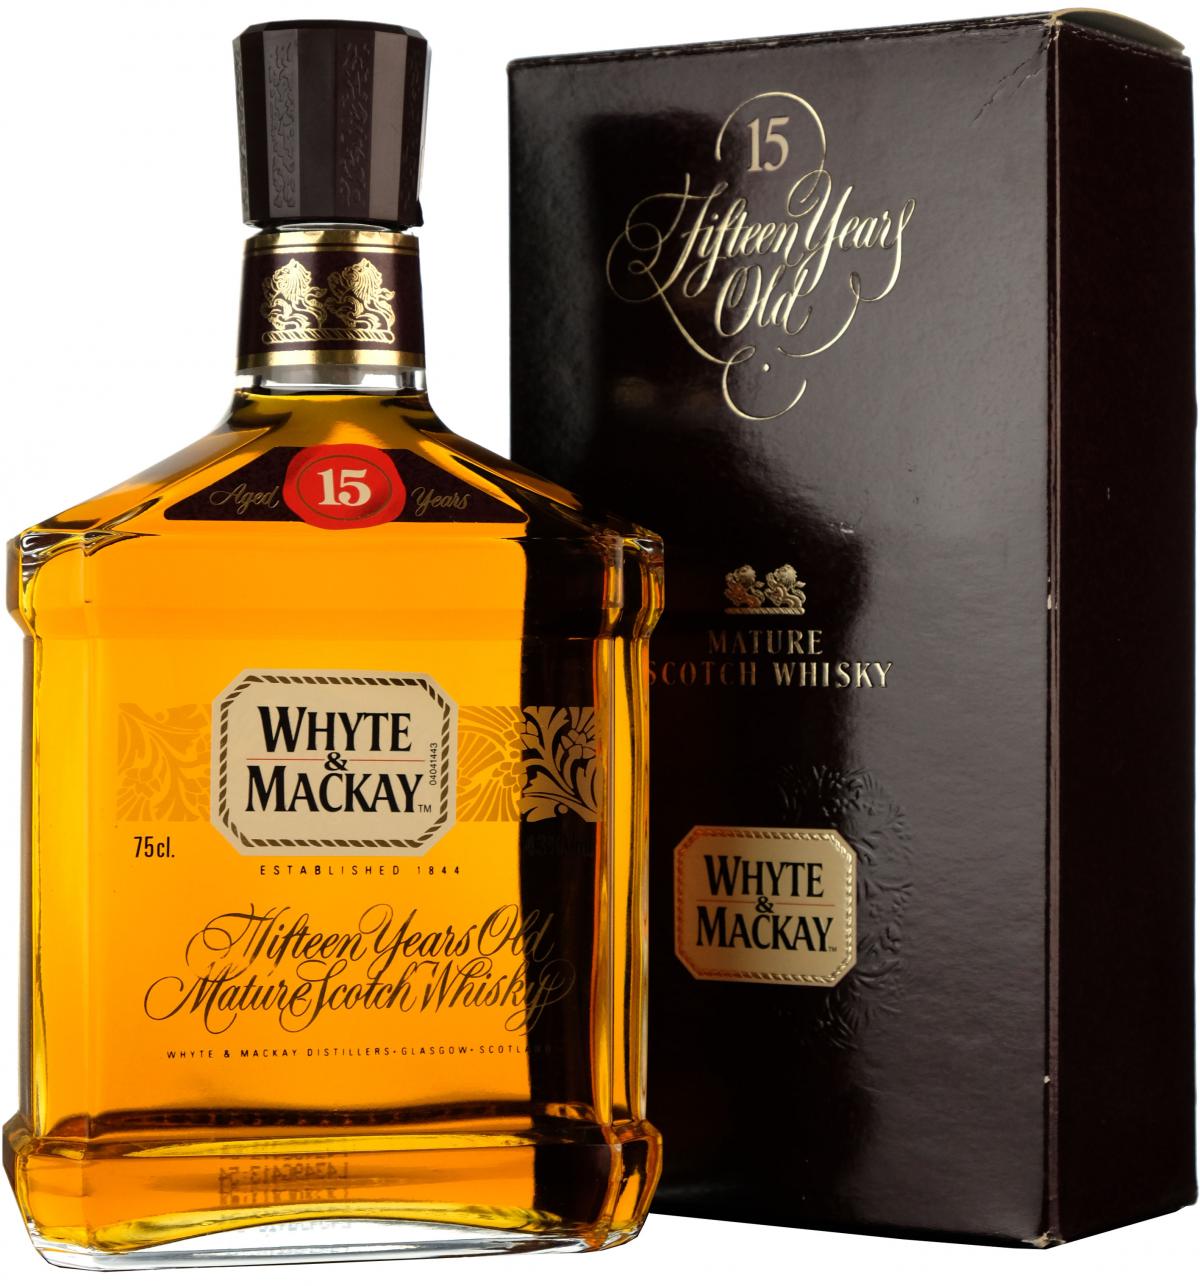 whyte mackay blended scotch whisky.